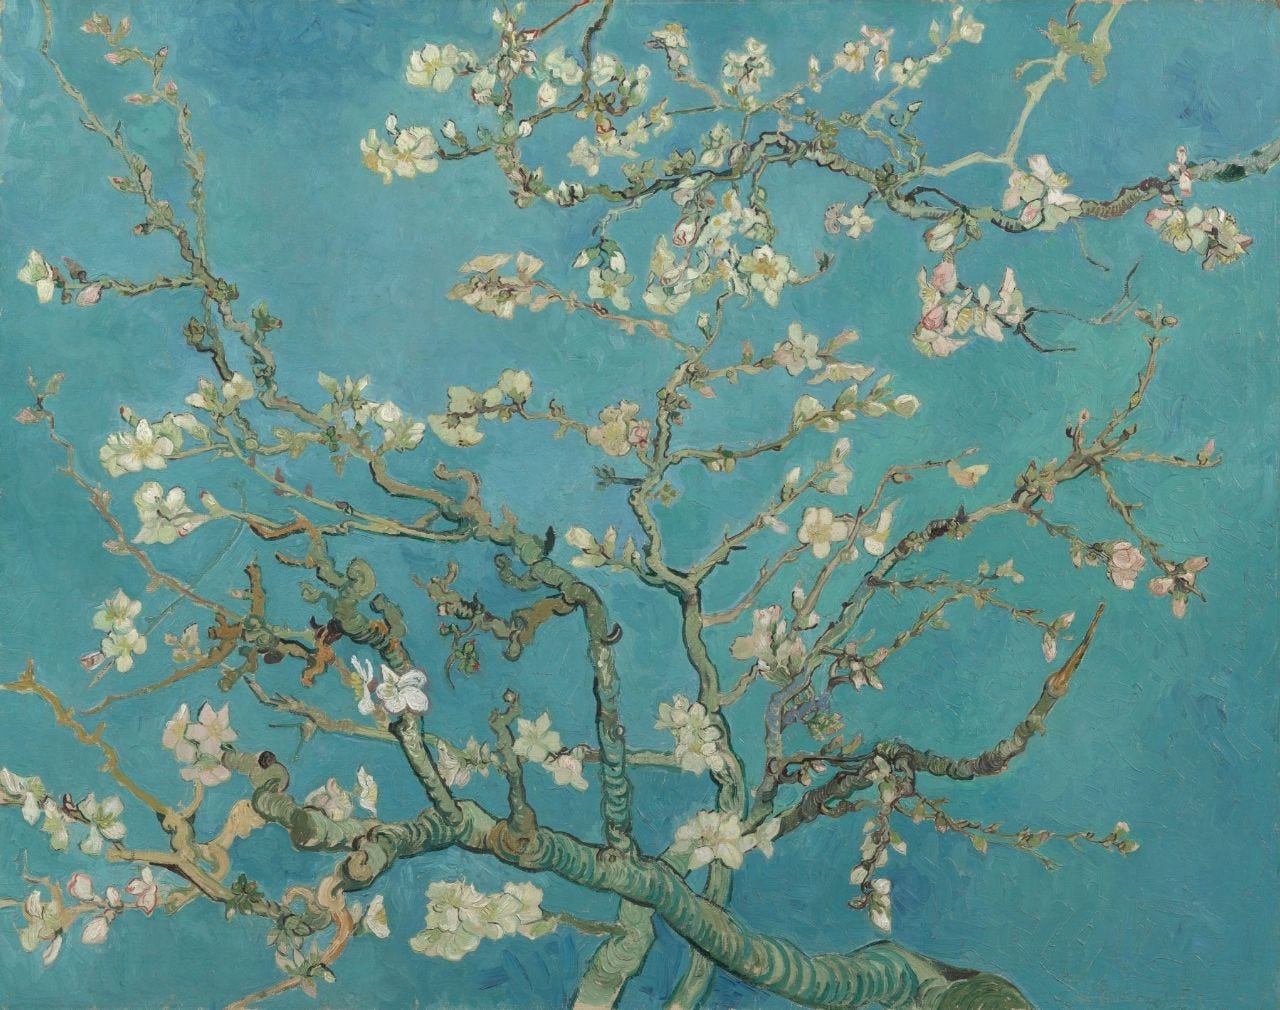 Almond Blossom - Vincent van Gogh - Van Gogh Museum